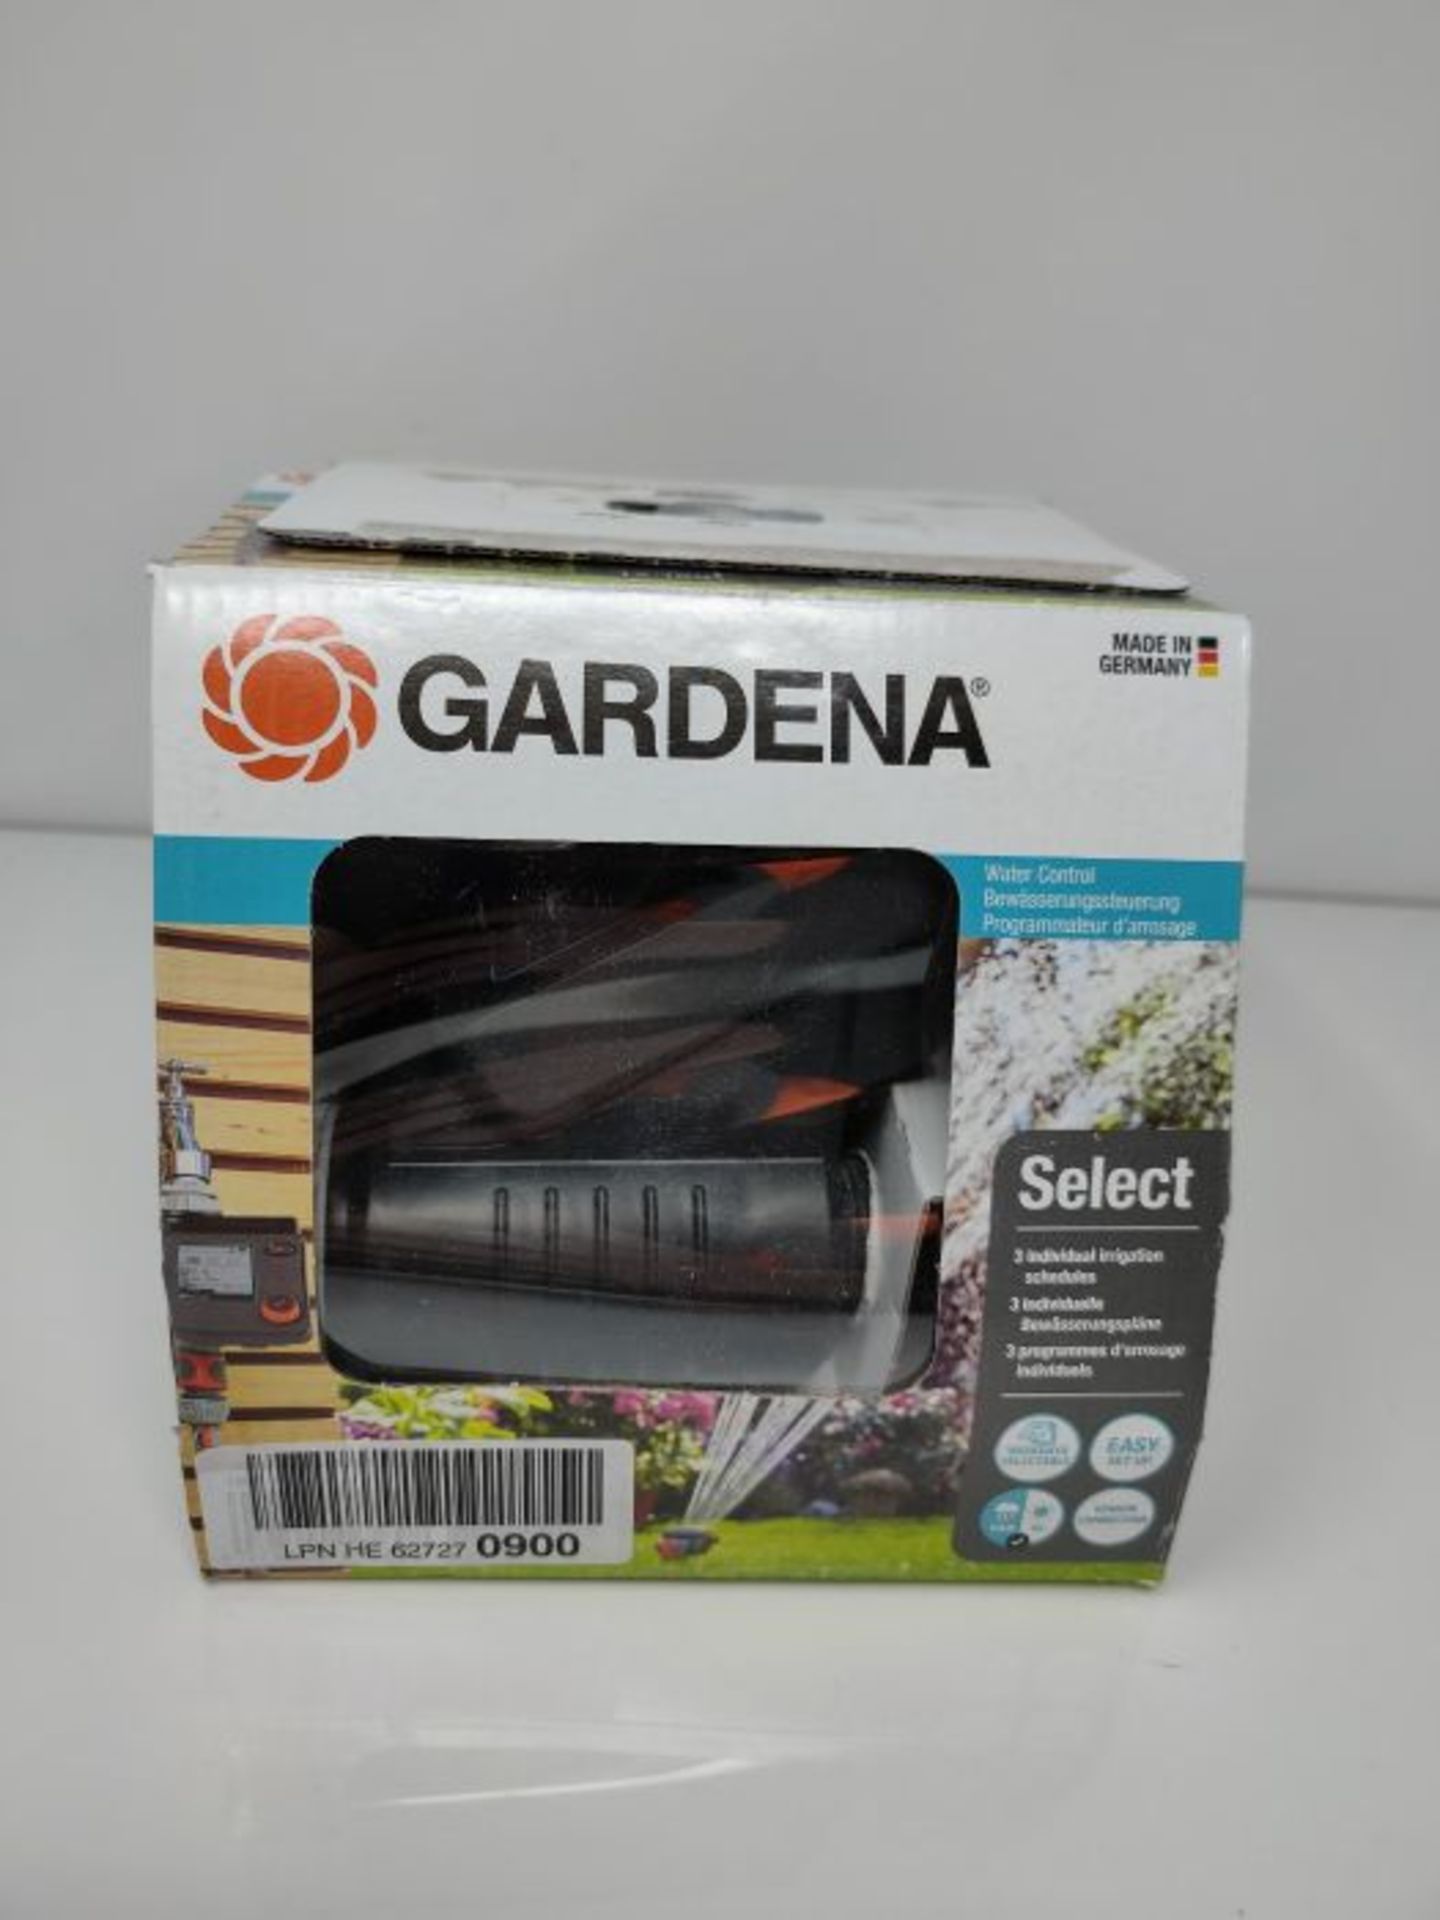 Gardena Select irrigation control, black, gray, orange - Image 2 of 3